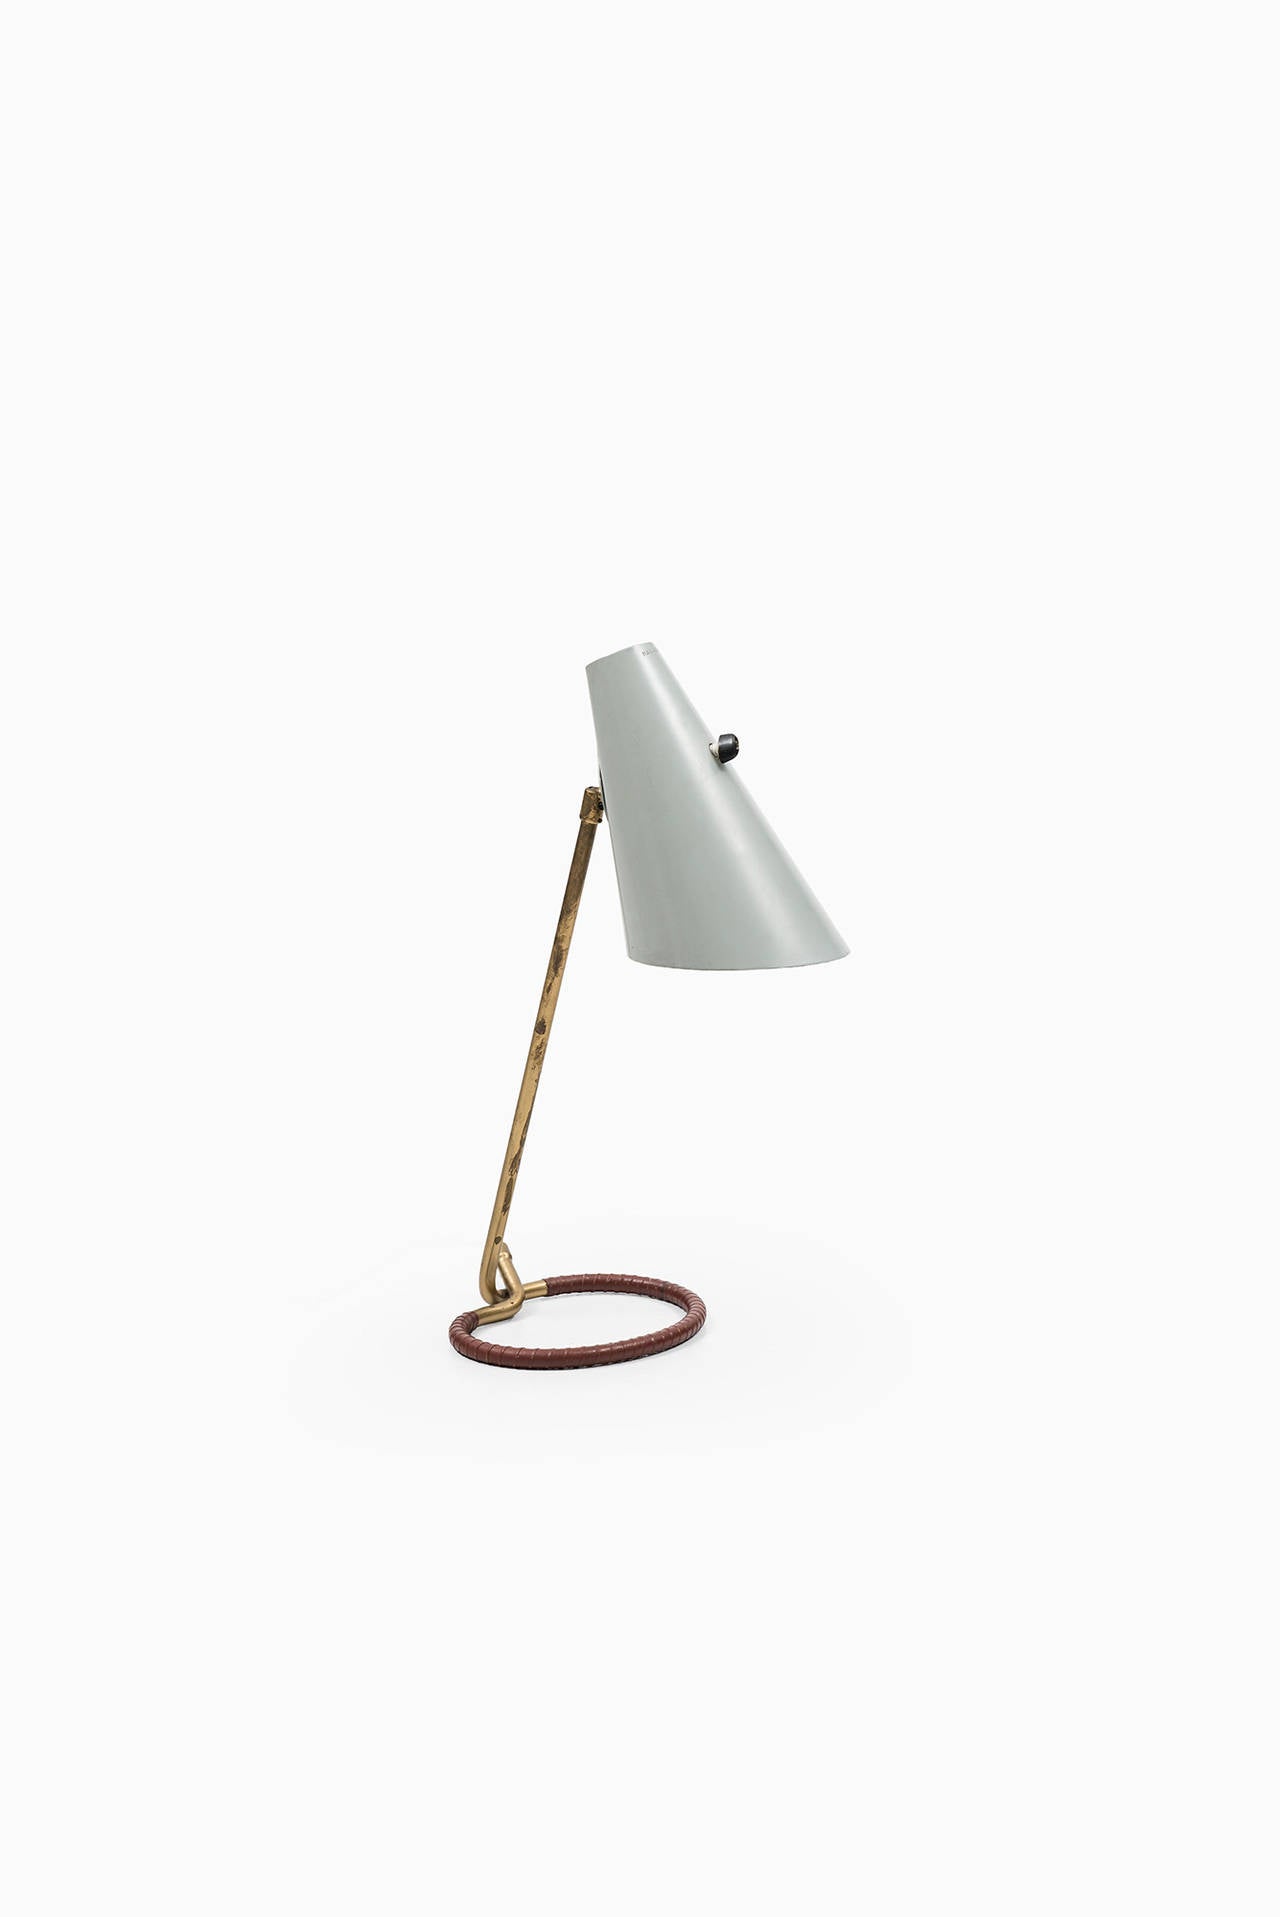 Hans Bergström table lamp model no. 711. Produced by Ateljé Lyktan in Åhus, Sweden.